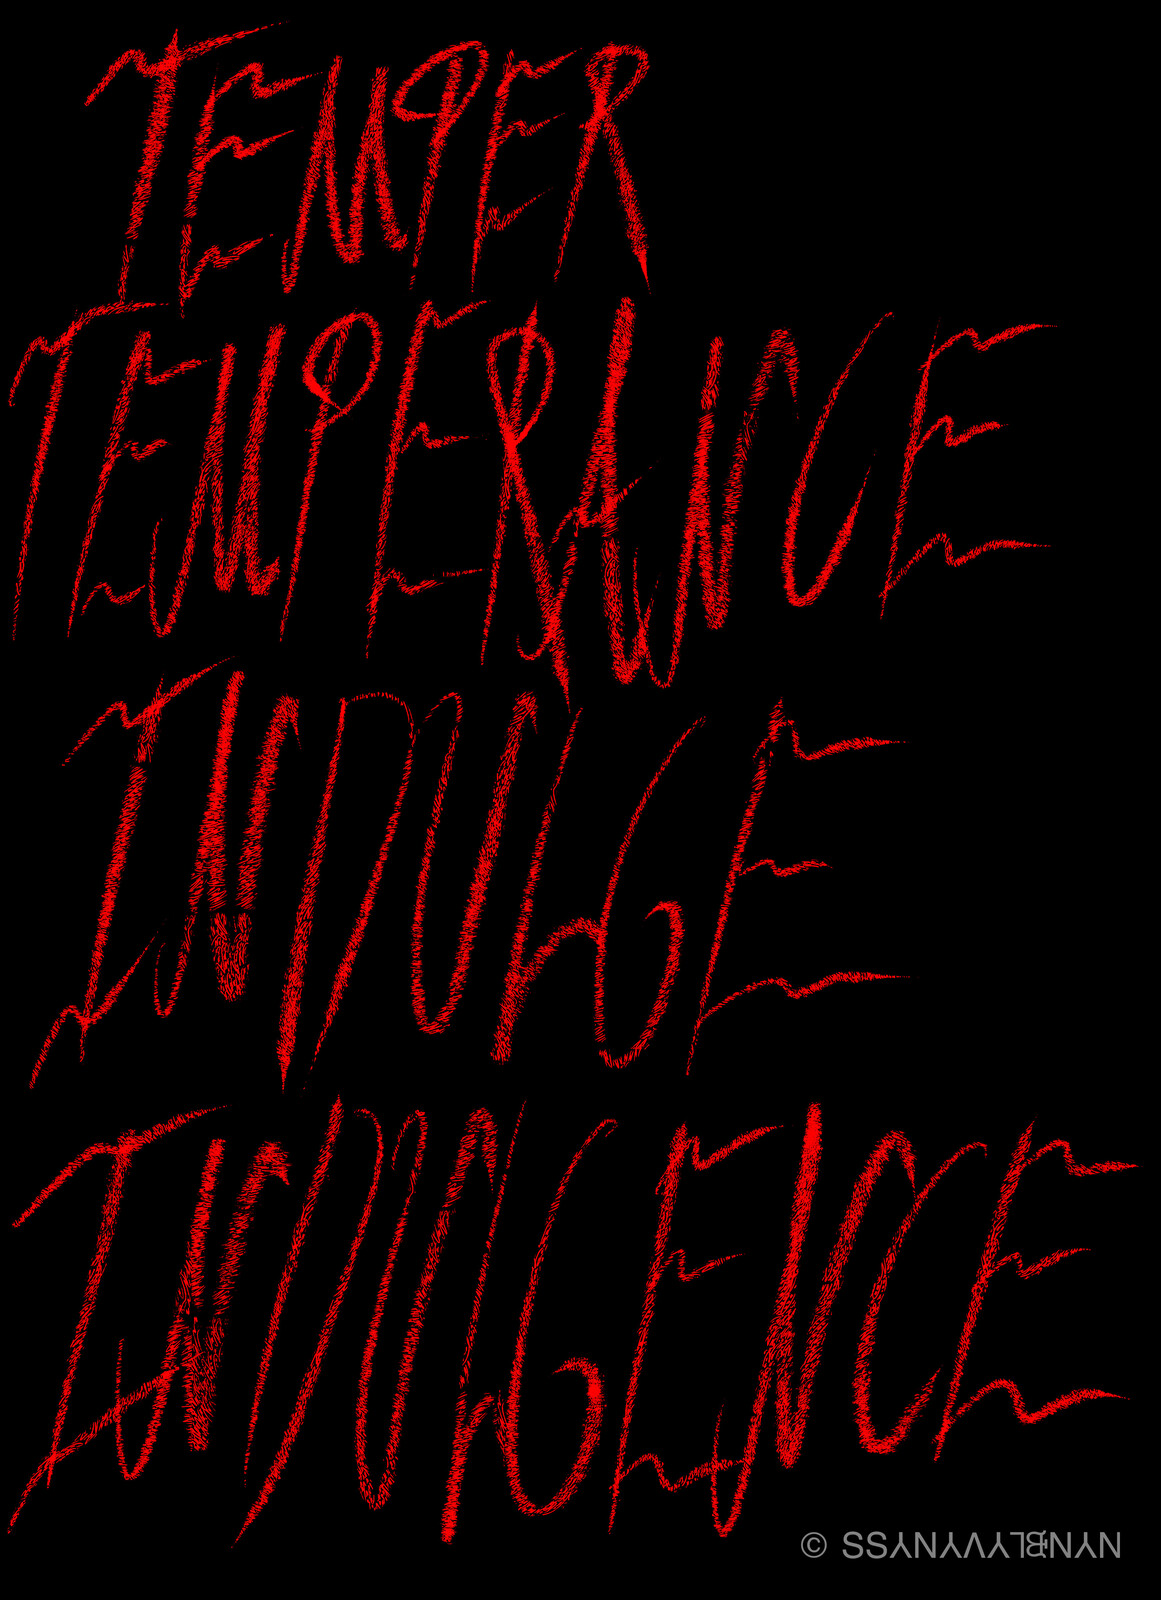 Temper Temperance Indulged Indulgence